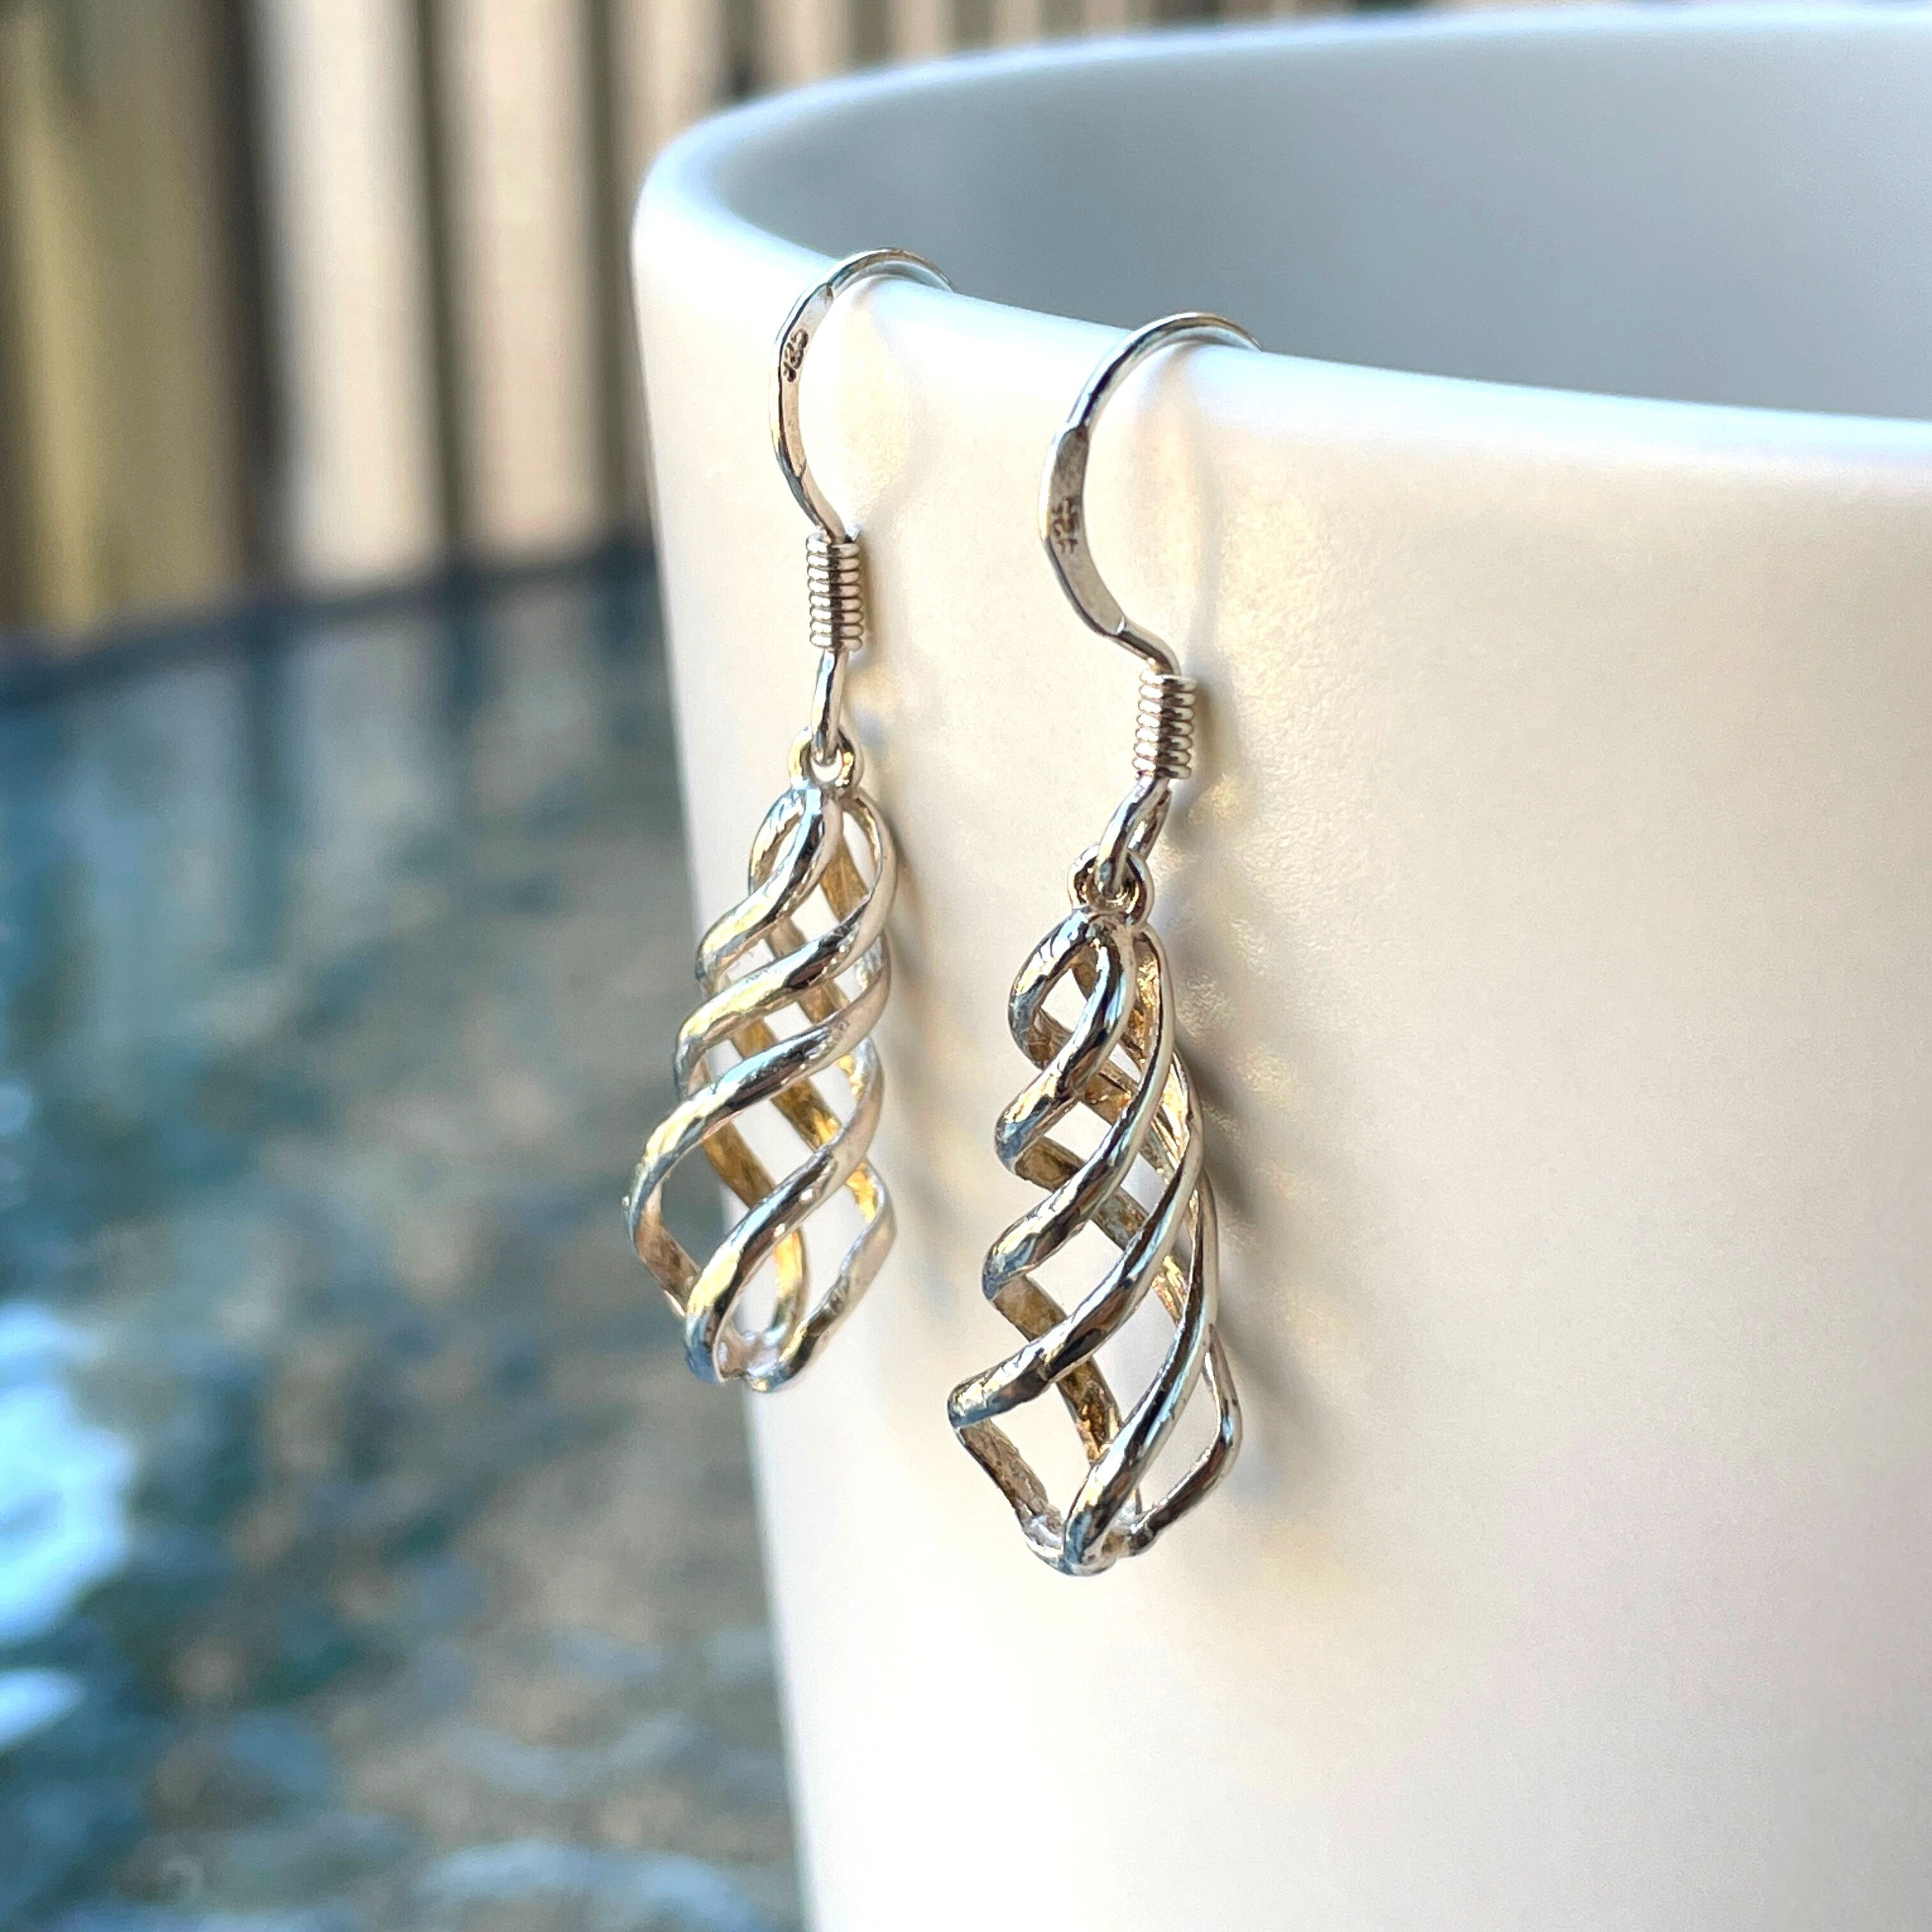 Silver Spiral Swirl Lightweight Metal Dangling Earrings 2 inch Hanging Dangle